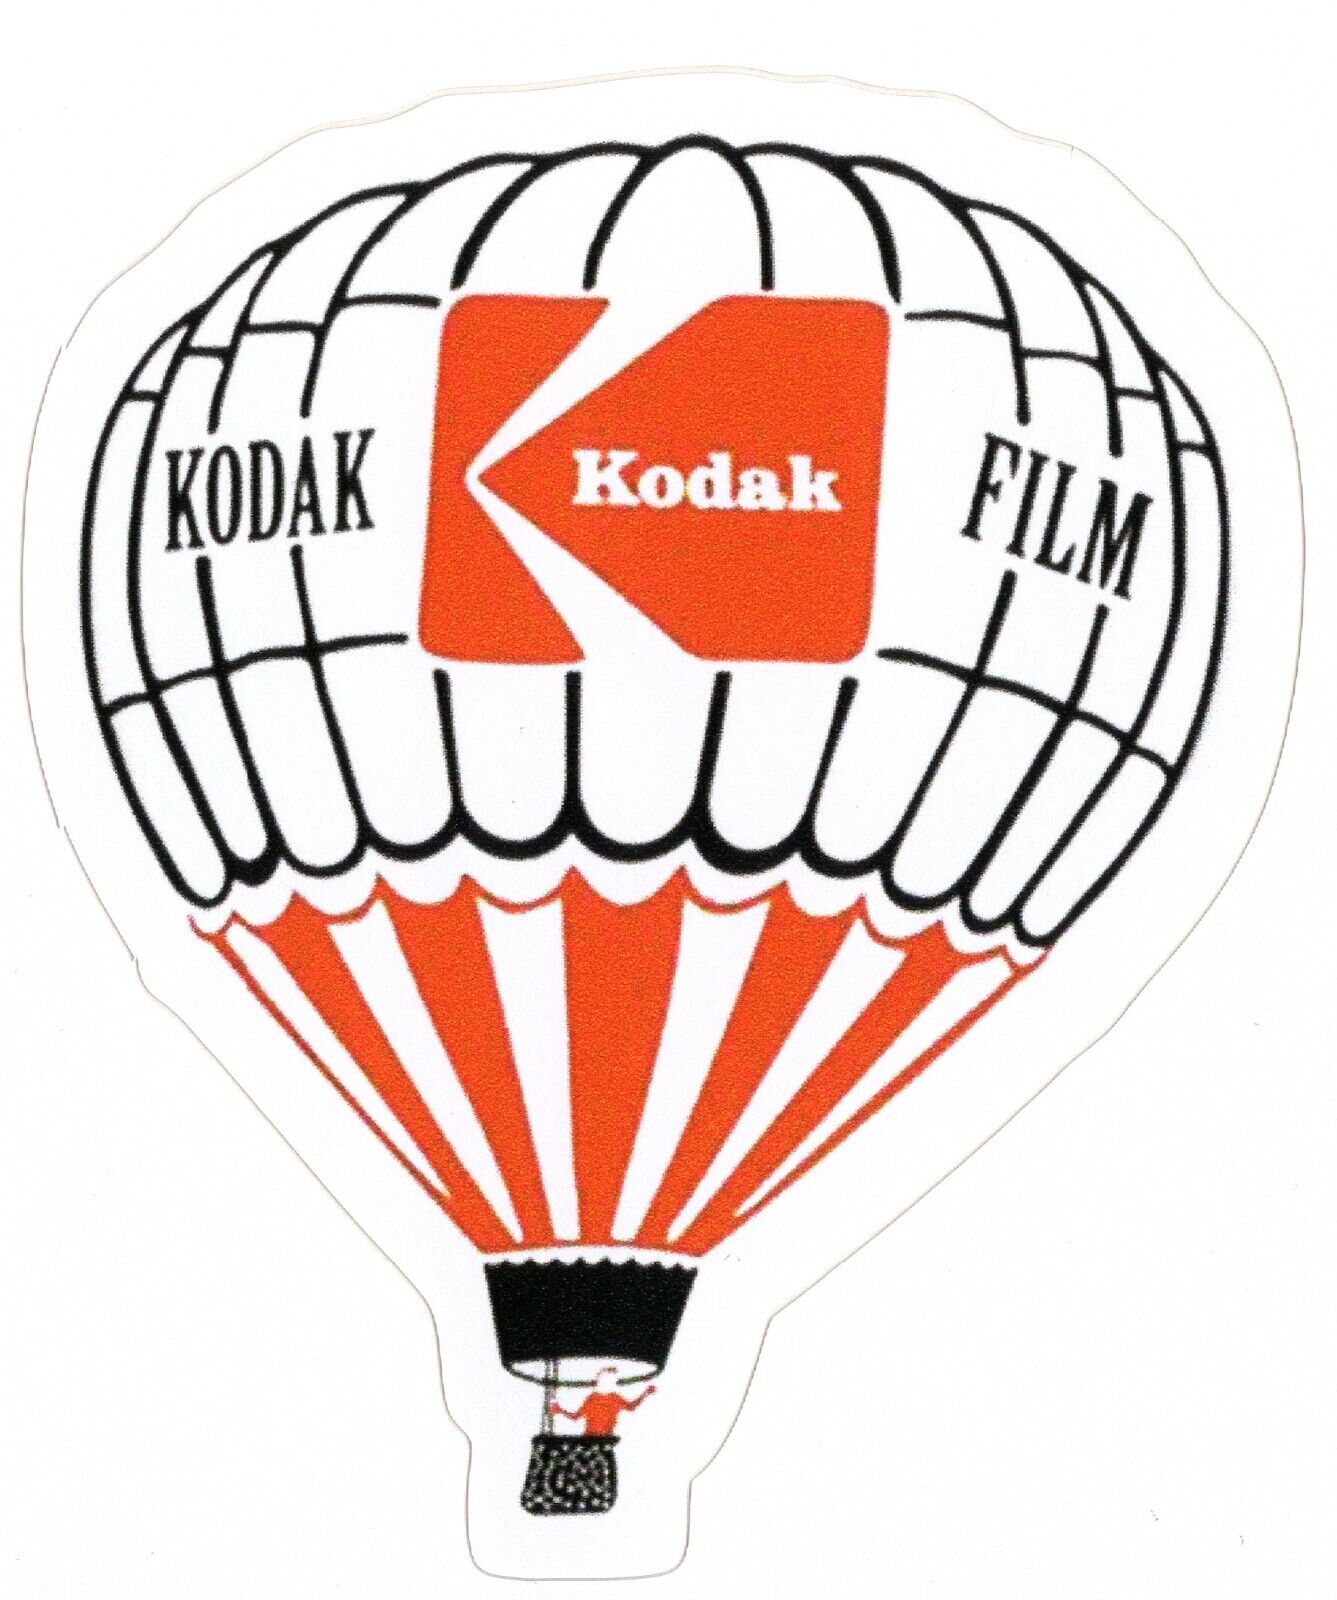 Kodak Film Hot Air Balloon Logo Sticker (Reproduction)